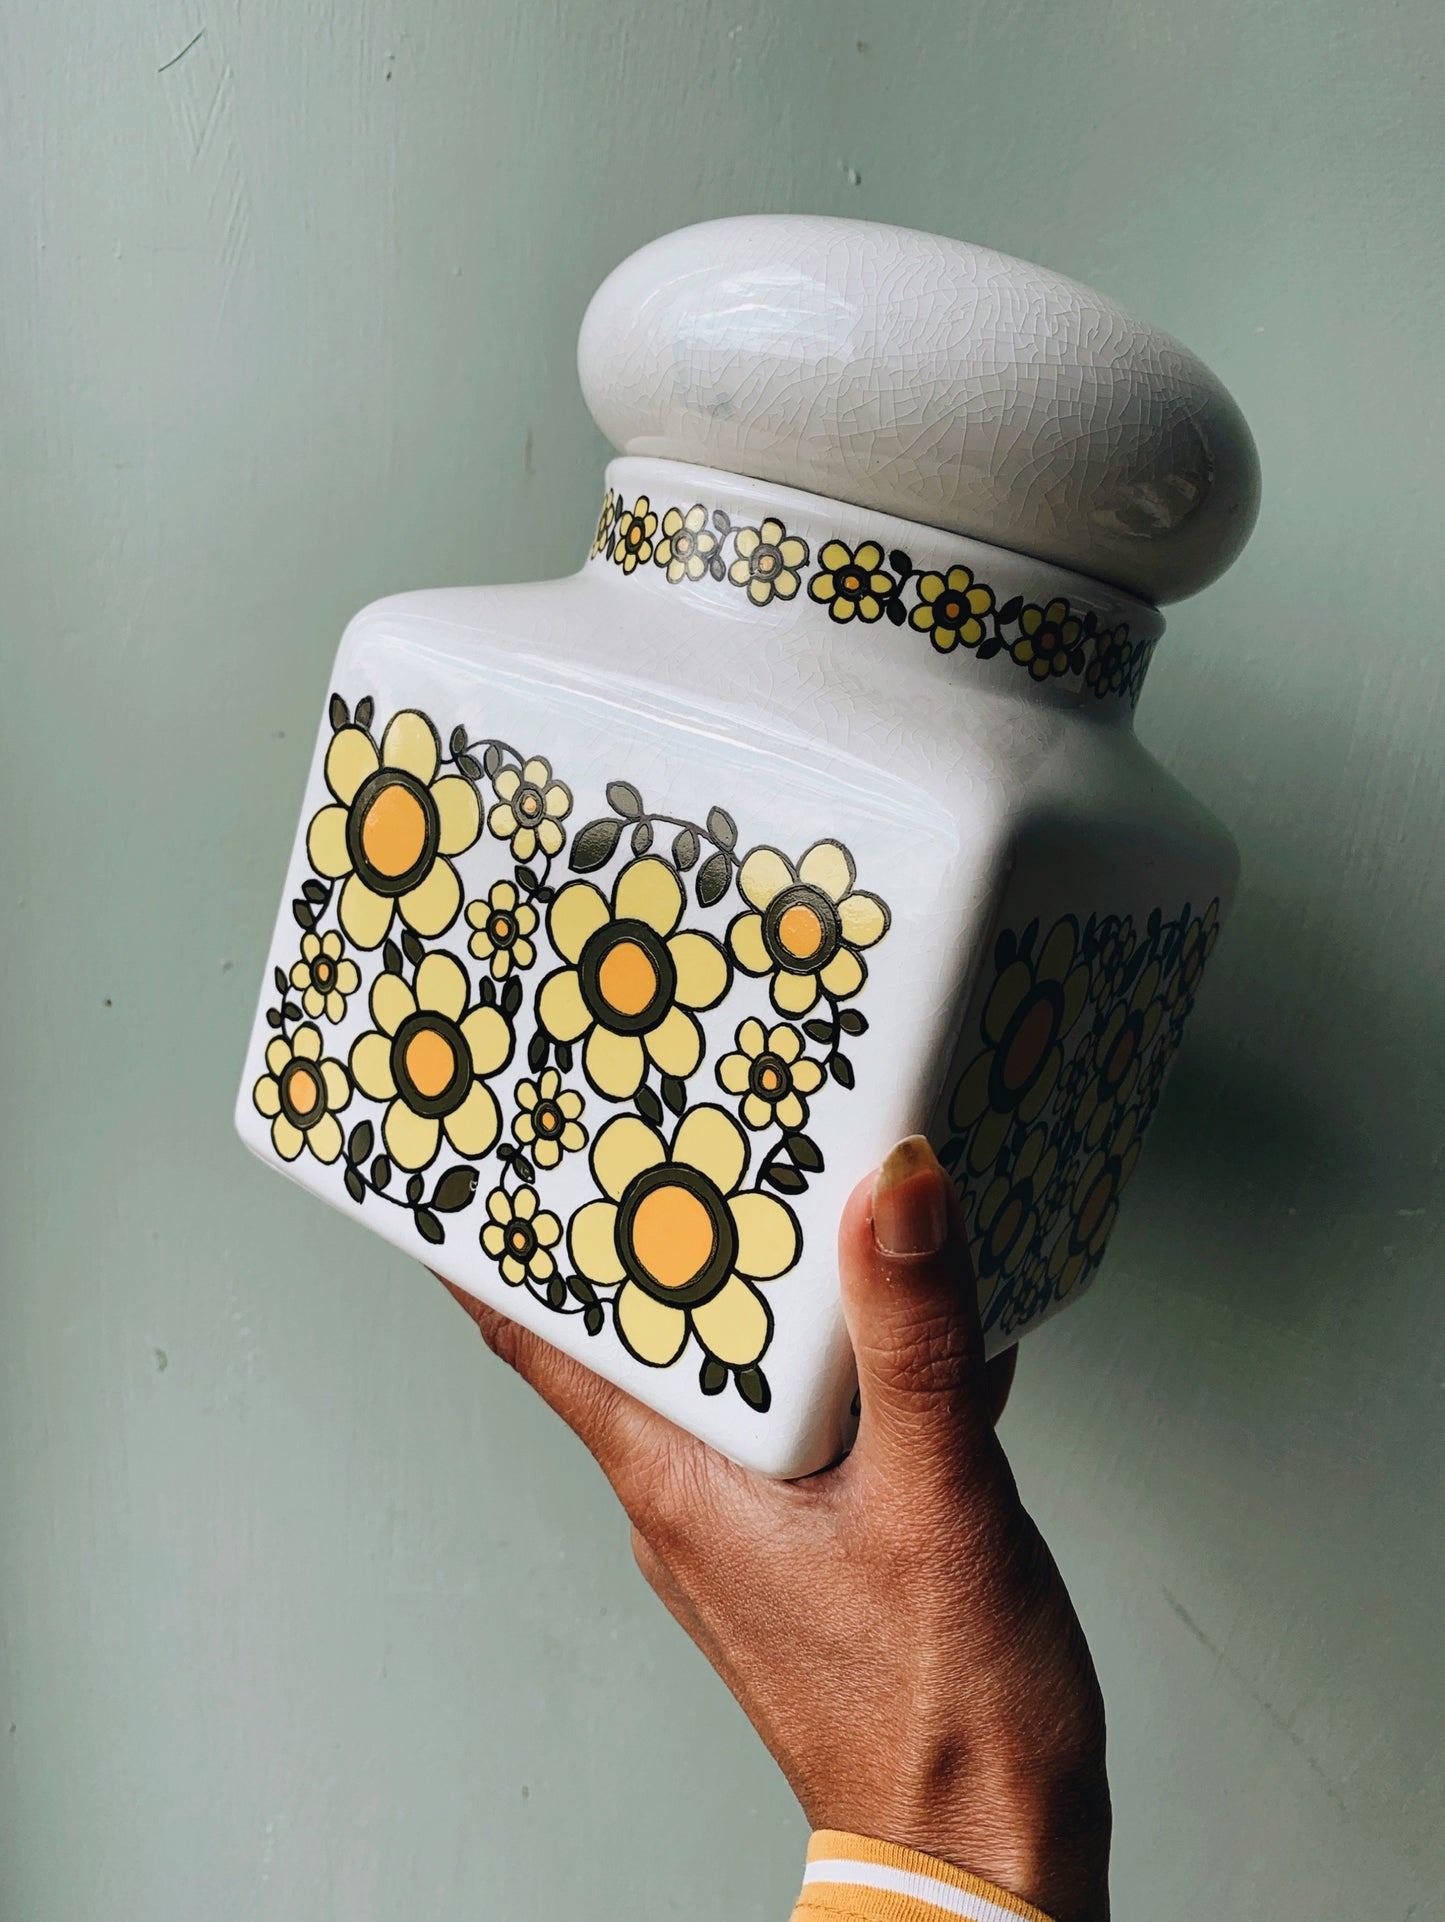 Large Retro Daisy Taunton Vale Ceramic Jar